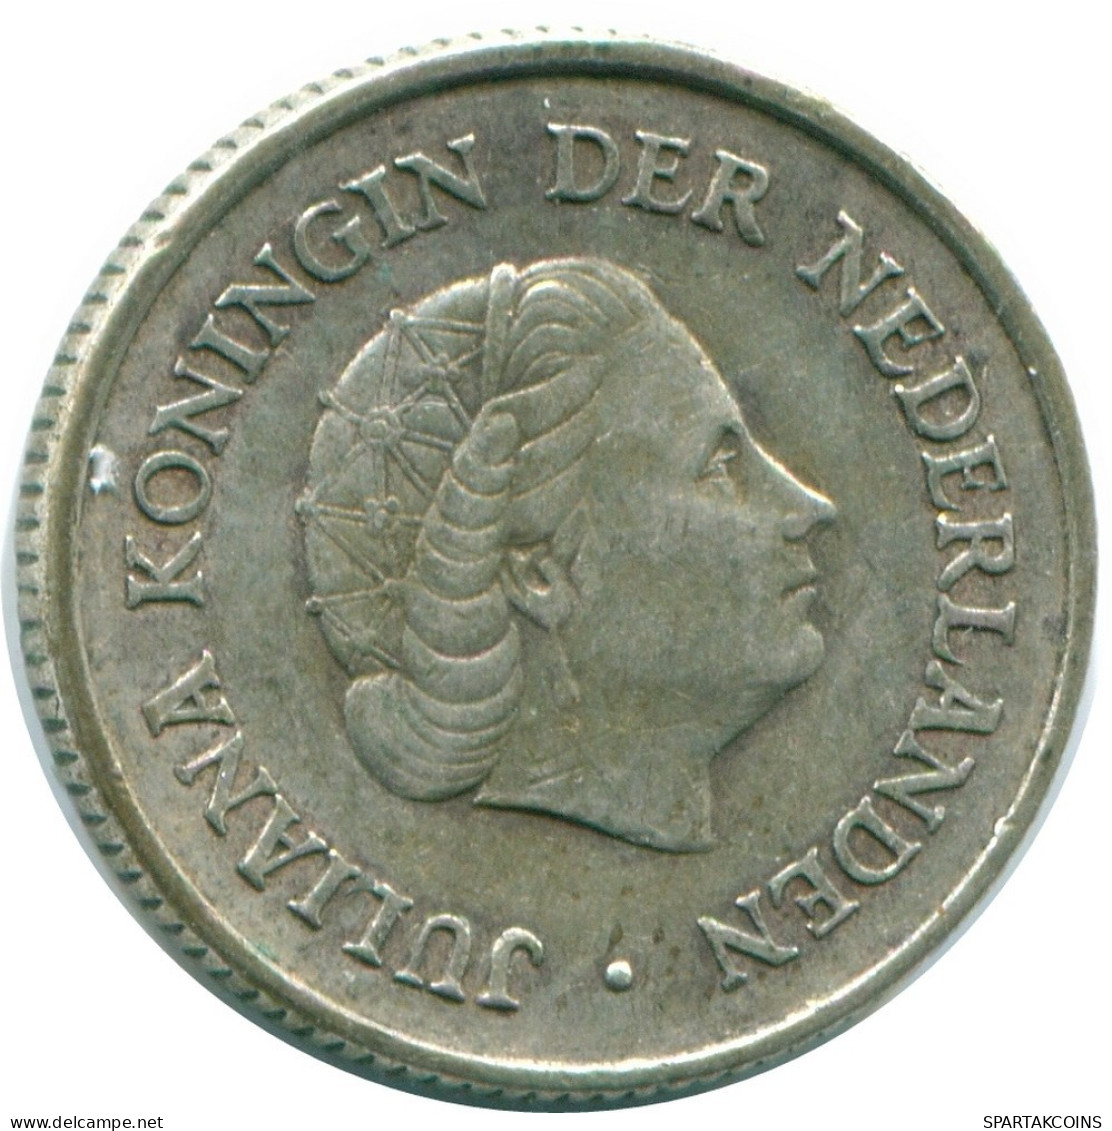 1/4 GULDEN 1965 NETHERLANDS ANTILLES SILVER Colonial Coin #NL11385.4.U.A - Niederländische Antillen